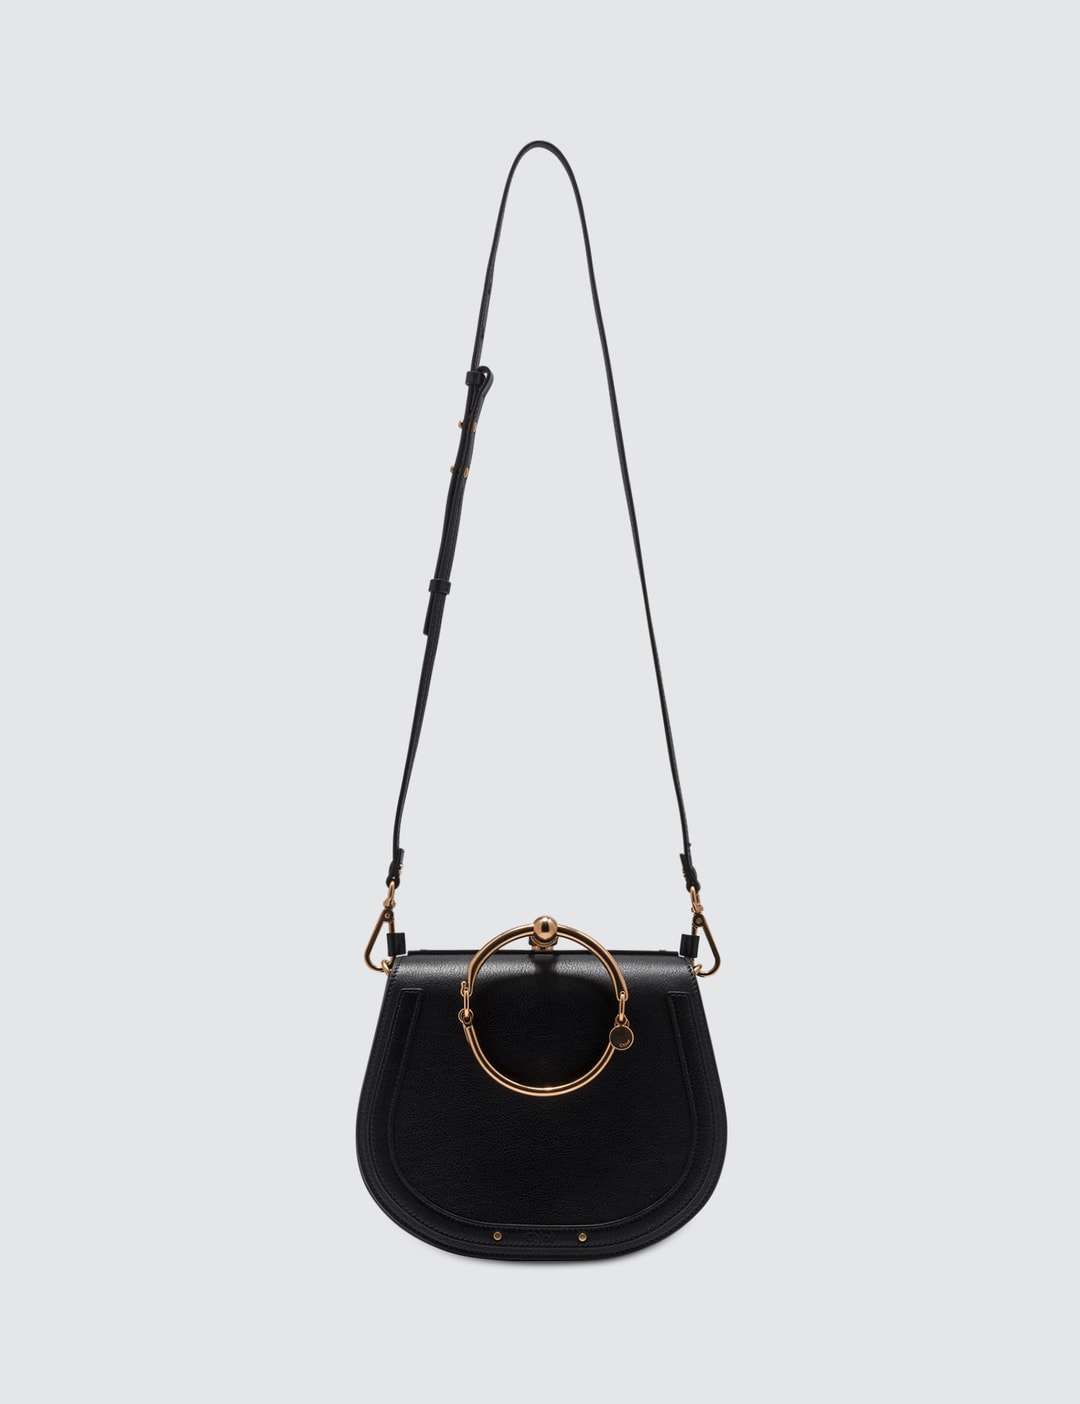 Chloé - Nile Cross Body Bag | HBX - Globally Curated Fashion and ...